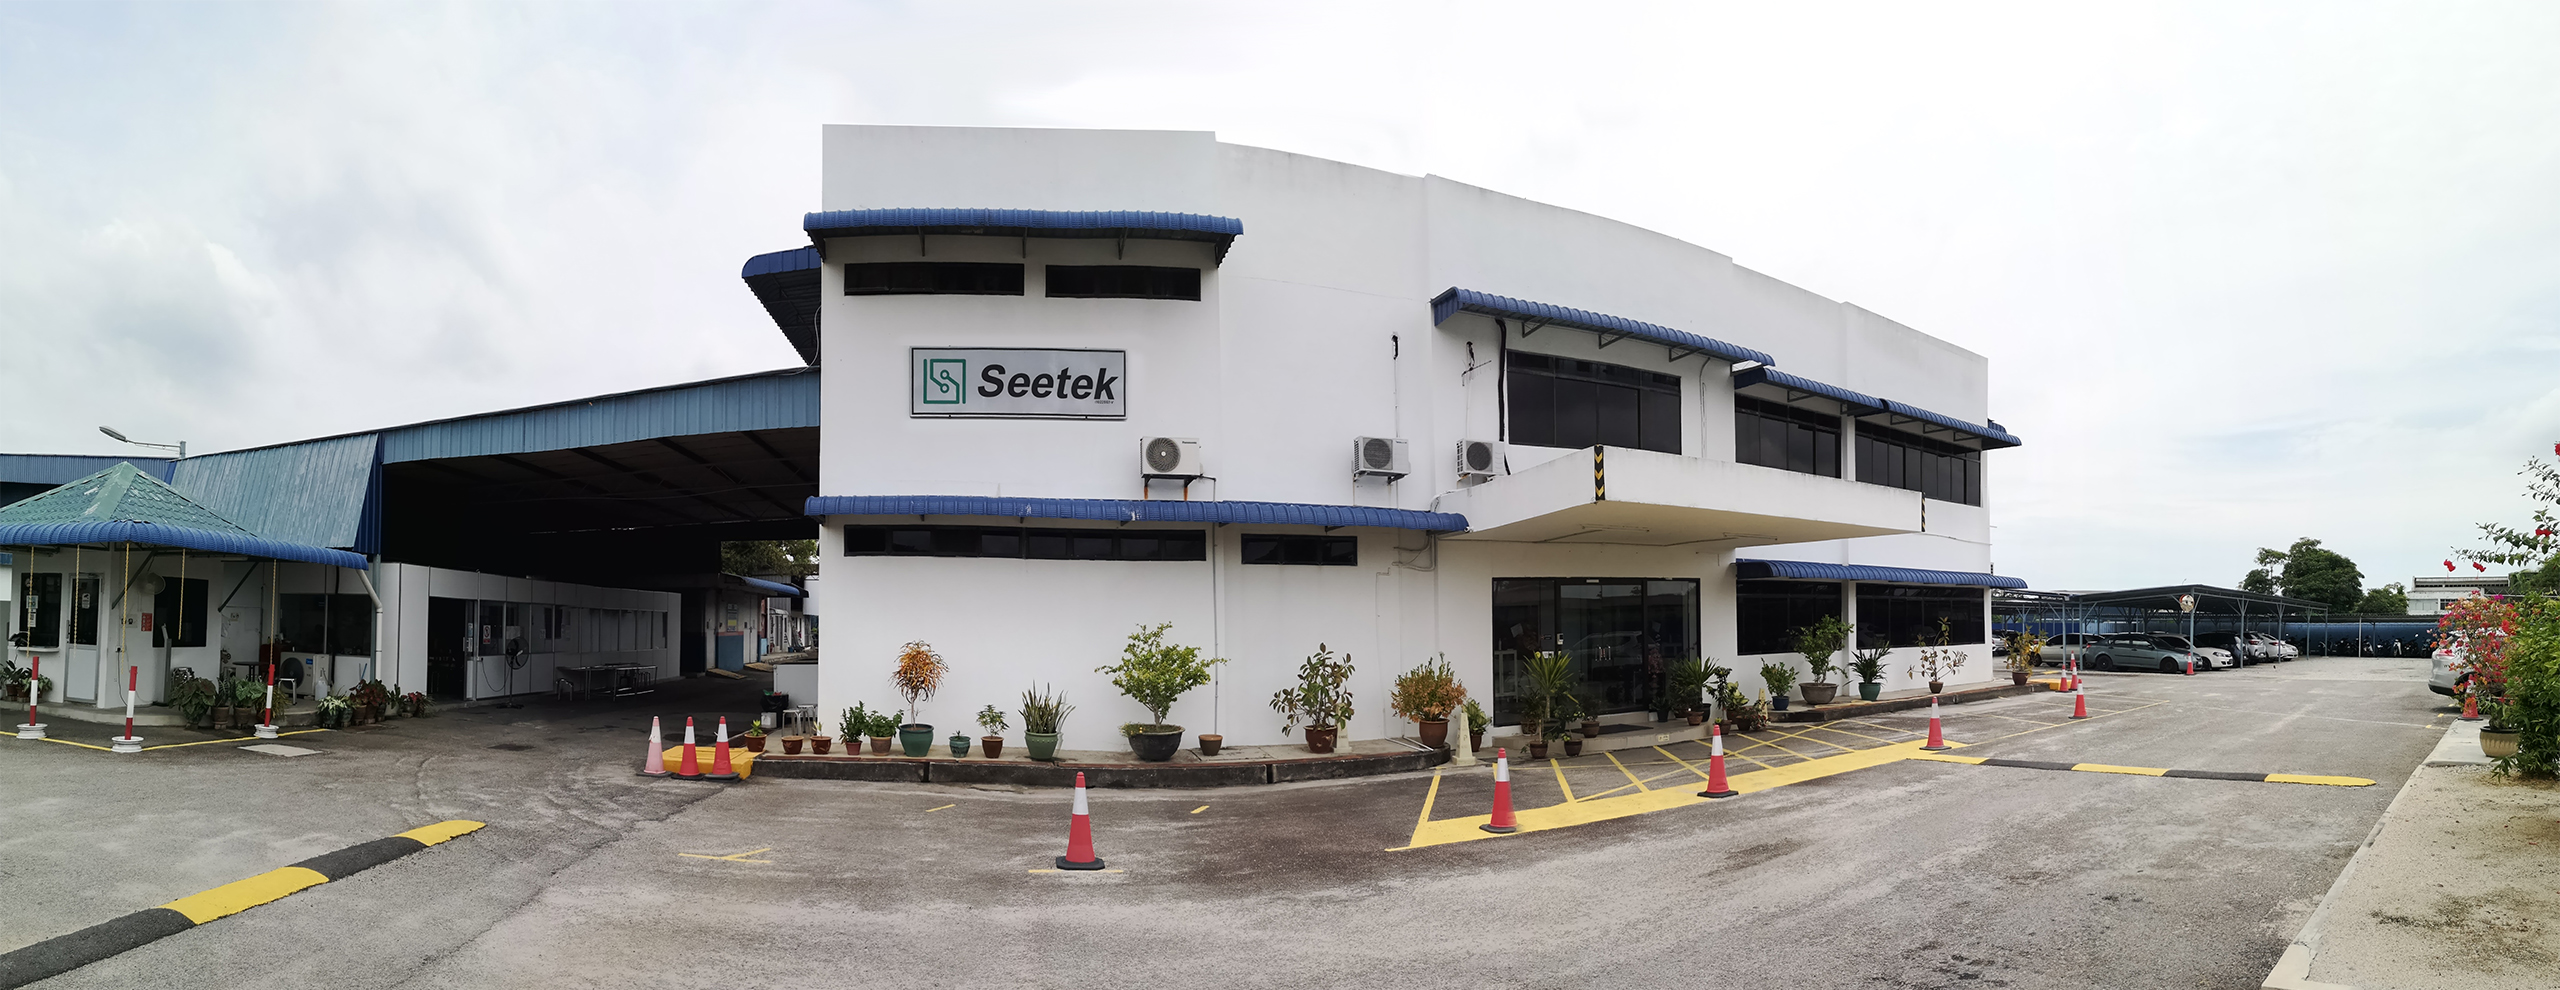 Seetek - Hypexe production facility